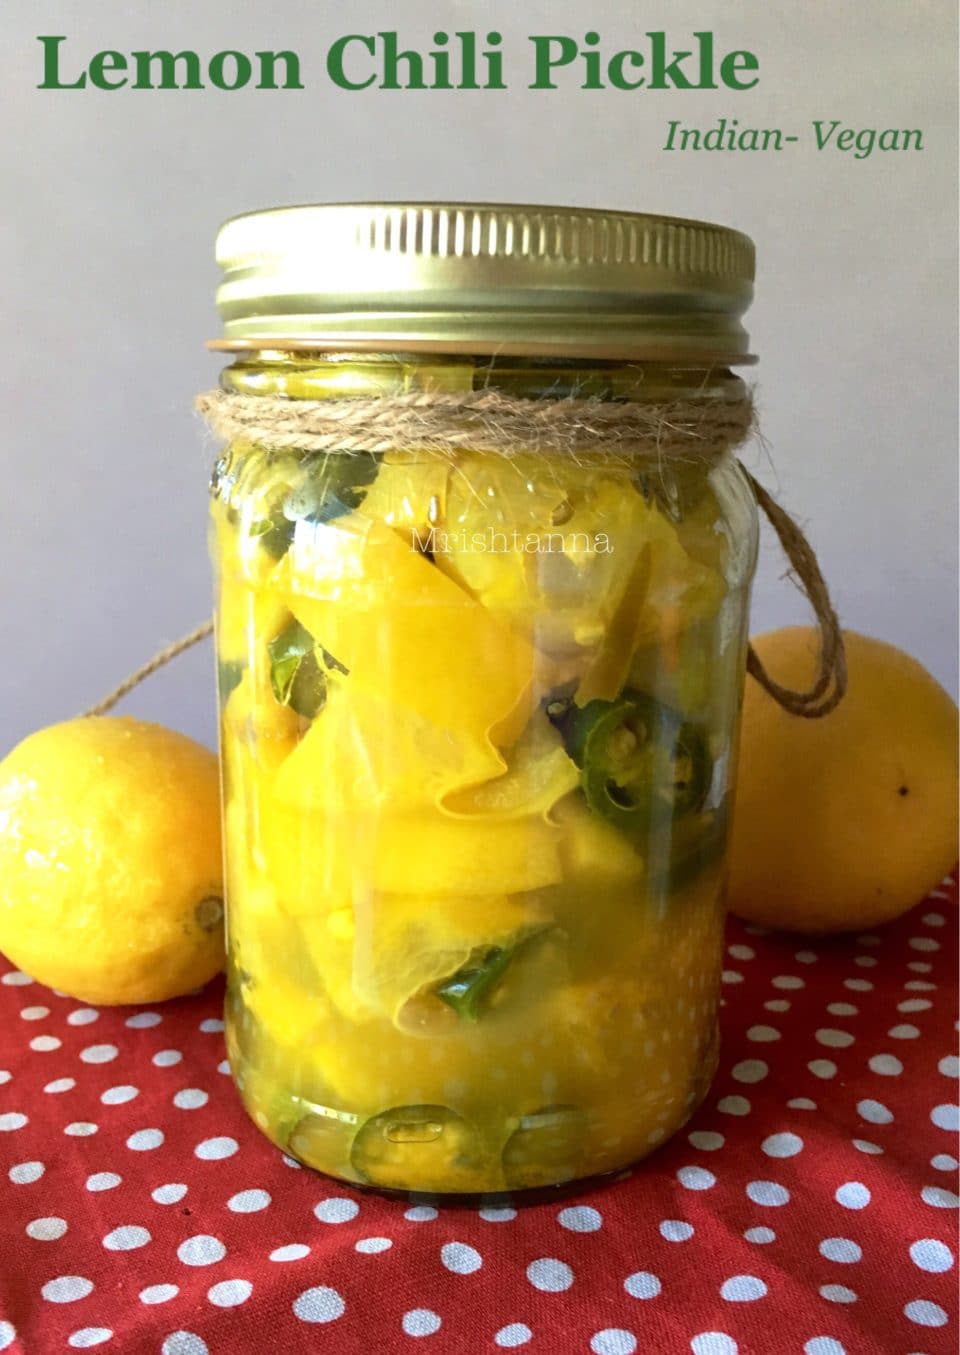 Lemon chili pickle is on the glass jar